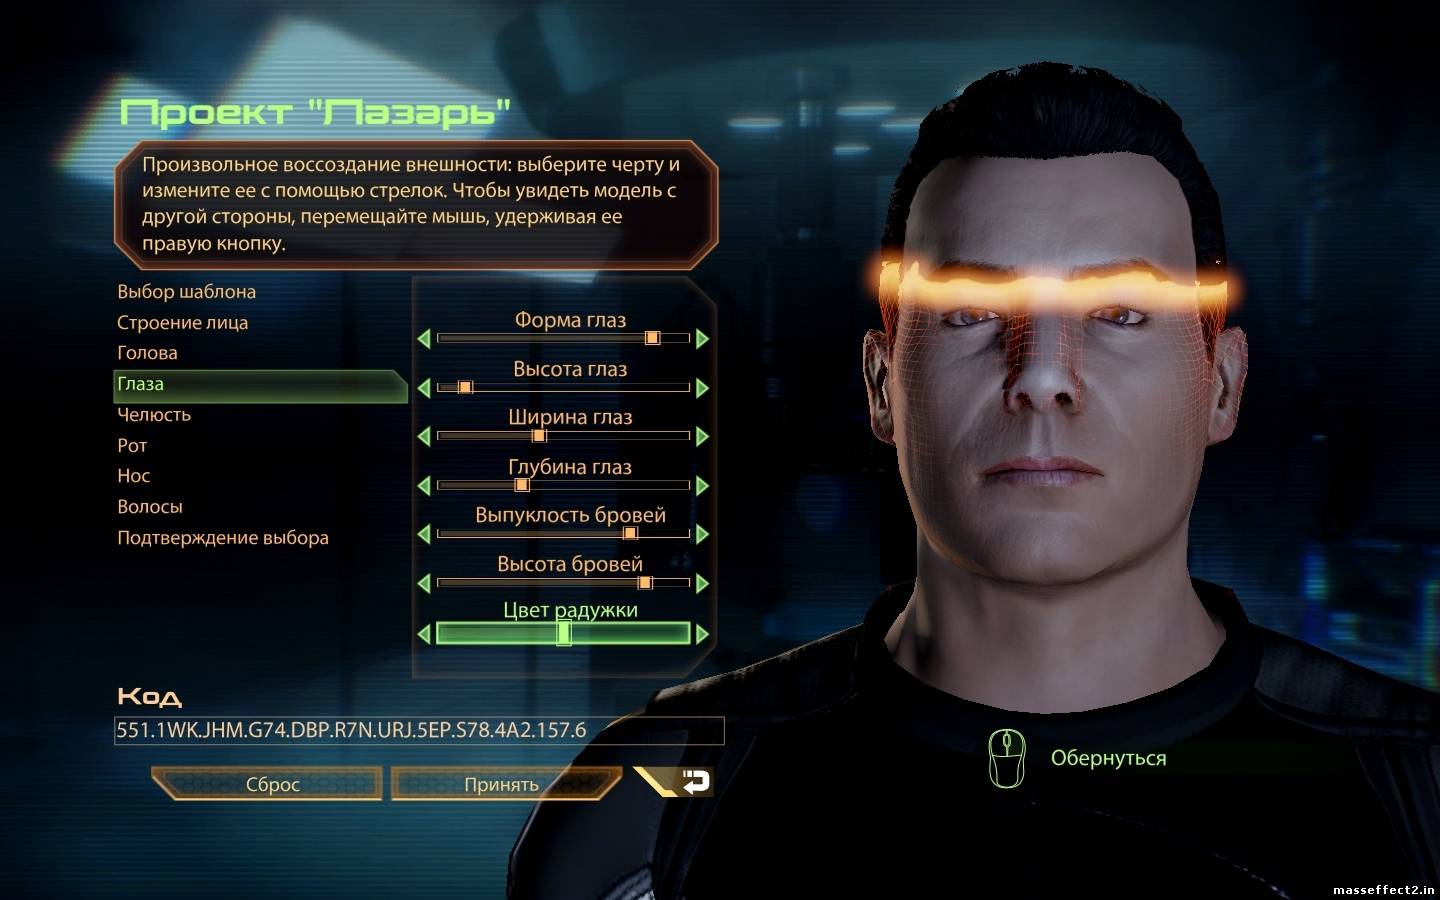 Чит код на изменение внешности. Mass Effect 2 код внешности Шепарда мужчина. Mass Effect коды внешности мужчина. Mass Effect 2 внешность Шепард мужчина. Масс эффект 2 внешность Шепард коды.